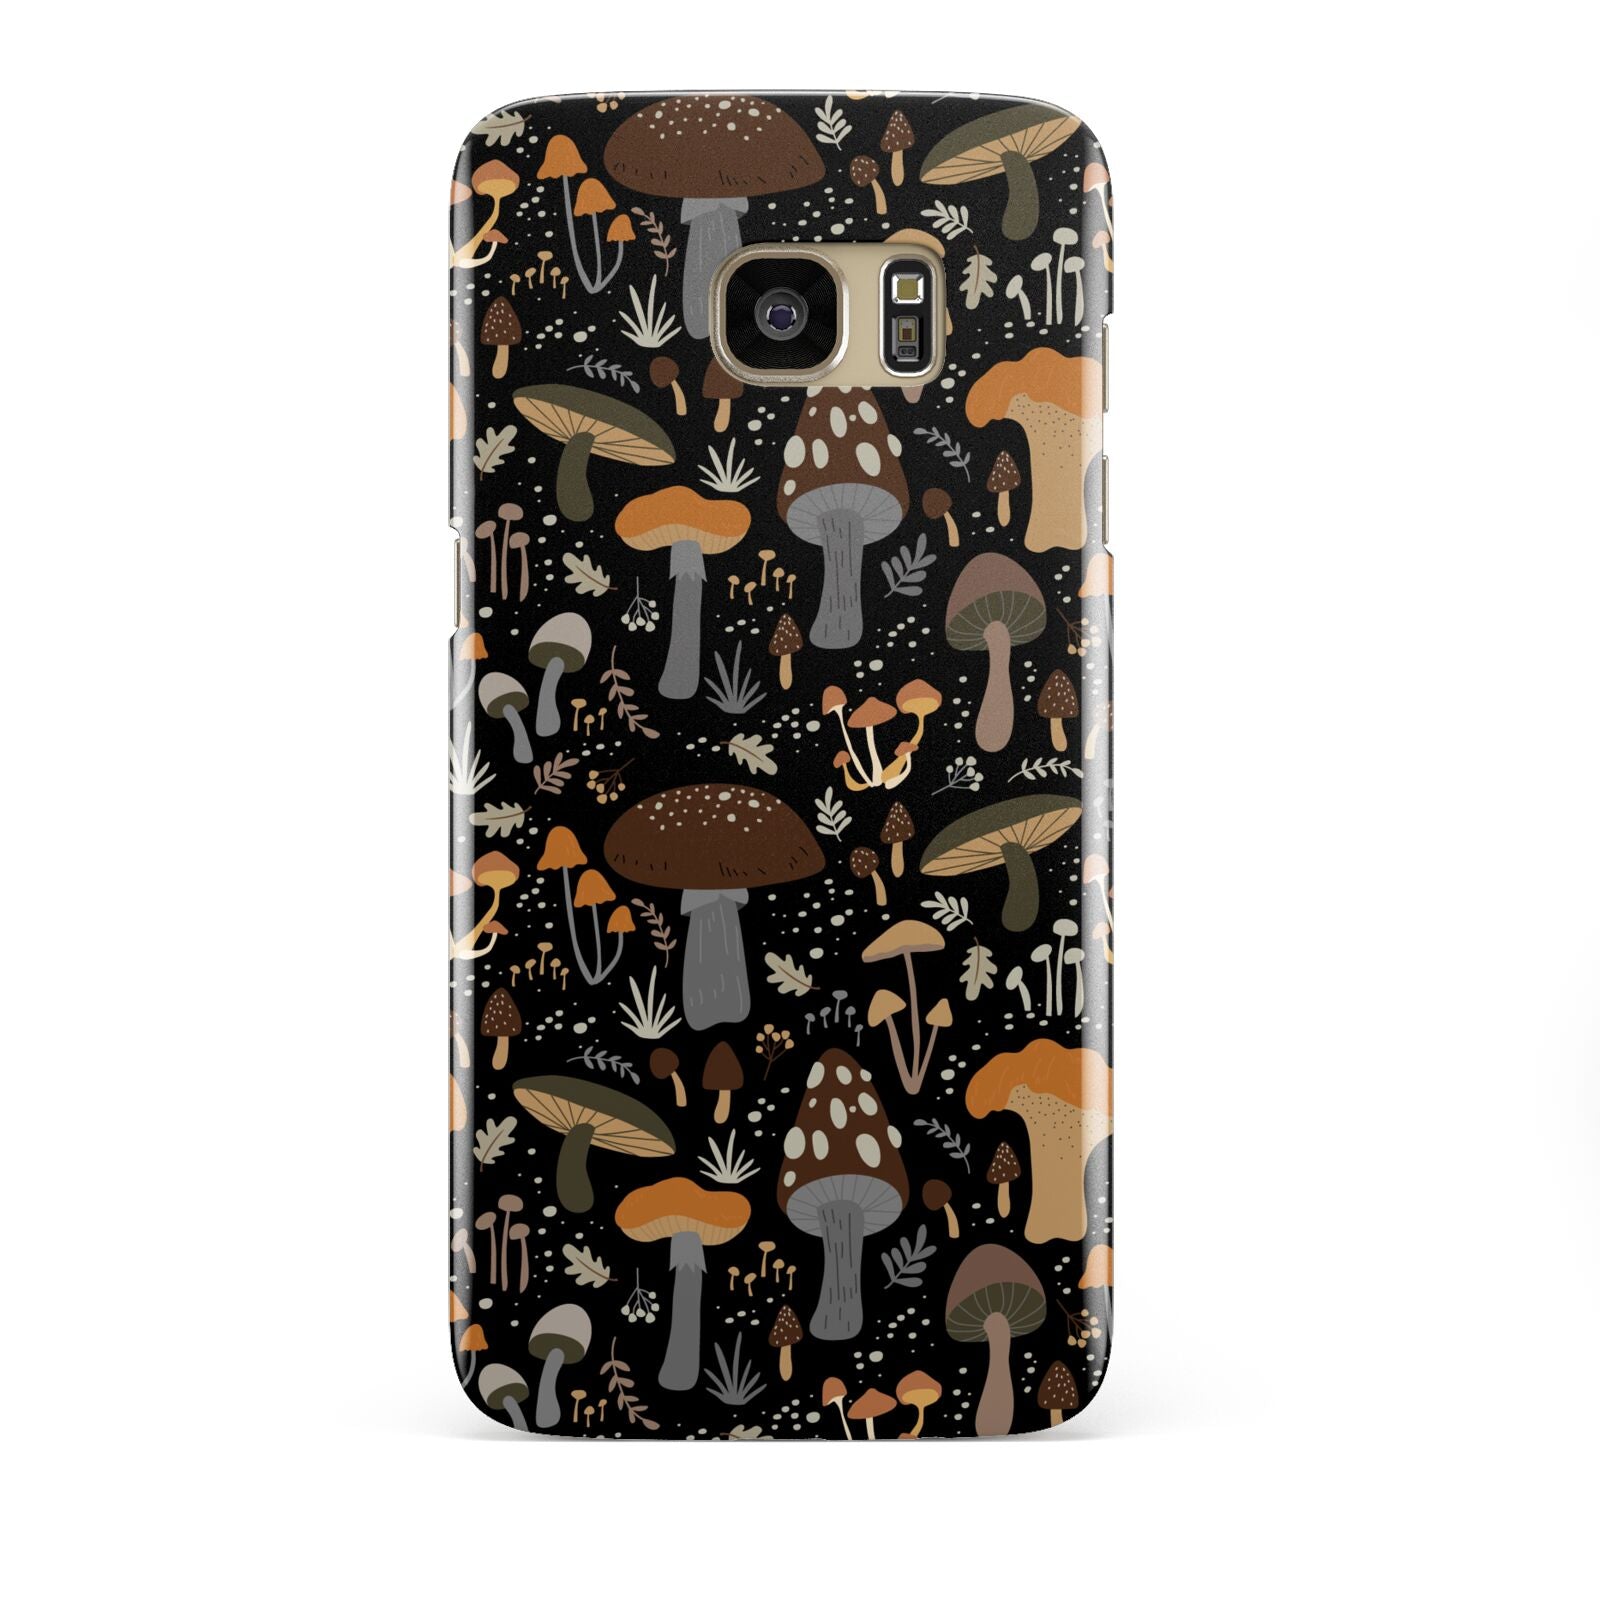 Mushroom Samsung Galaxy S7 Edge Case